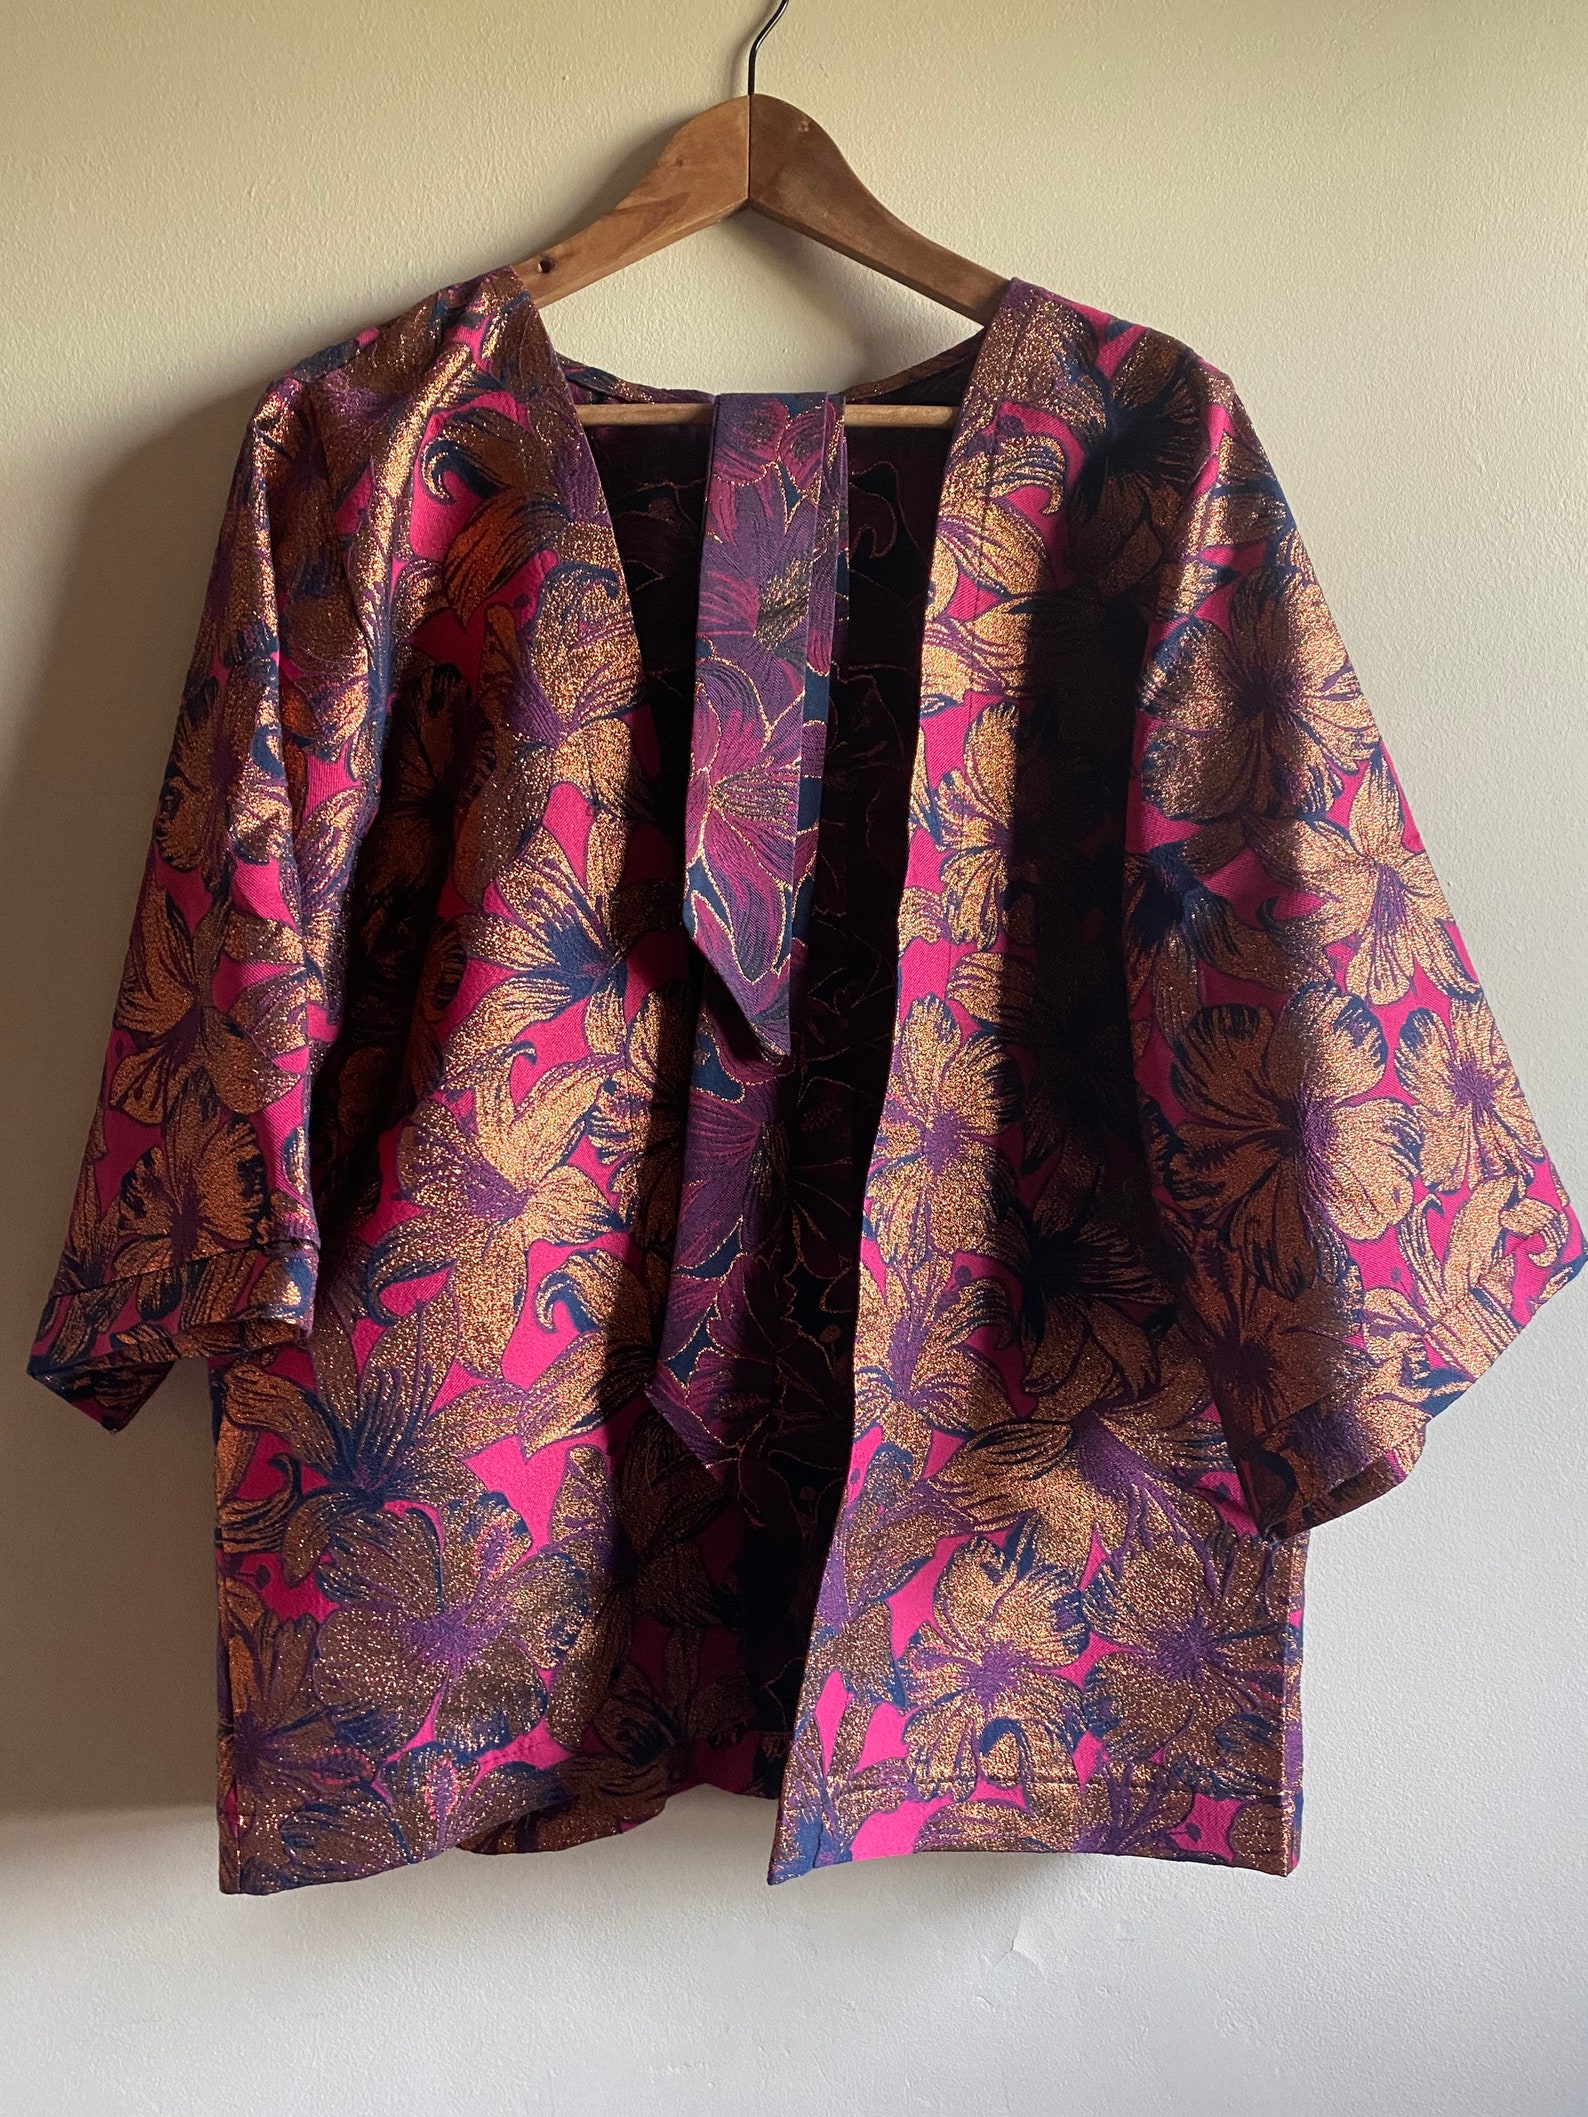 Unique Handmade Jacket Kimono | Etsy